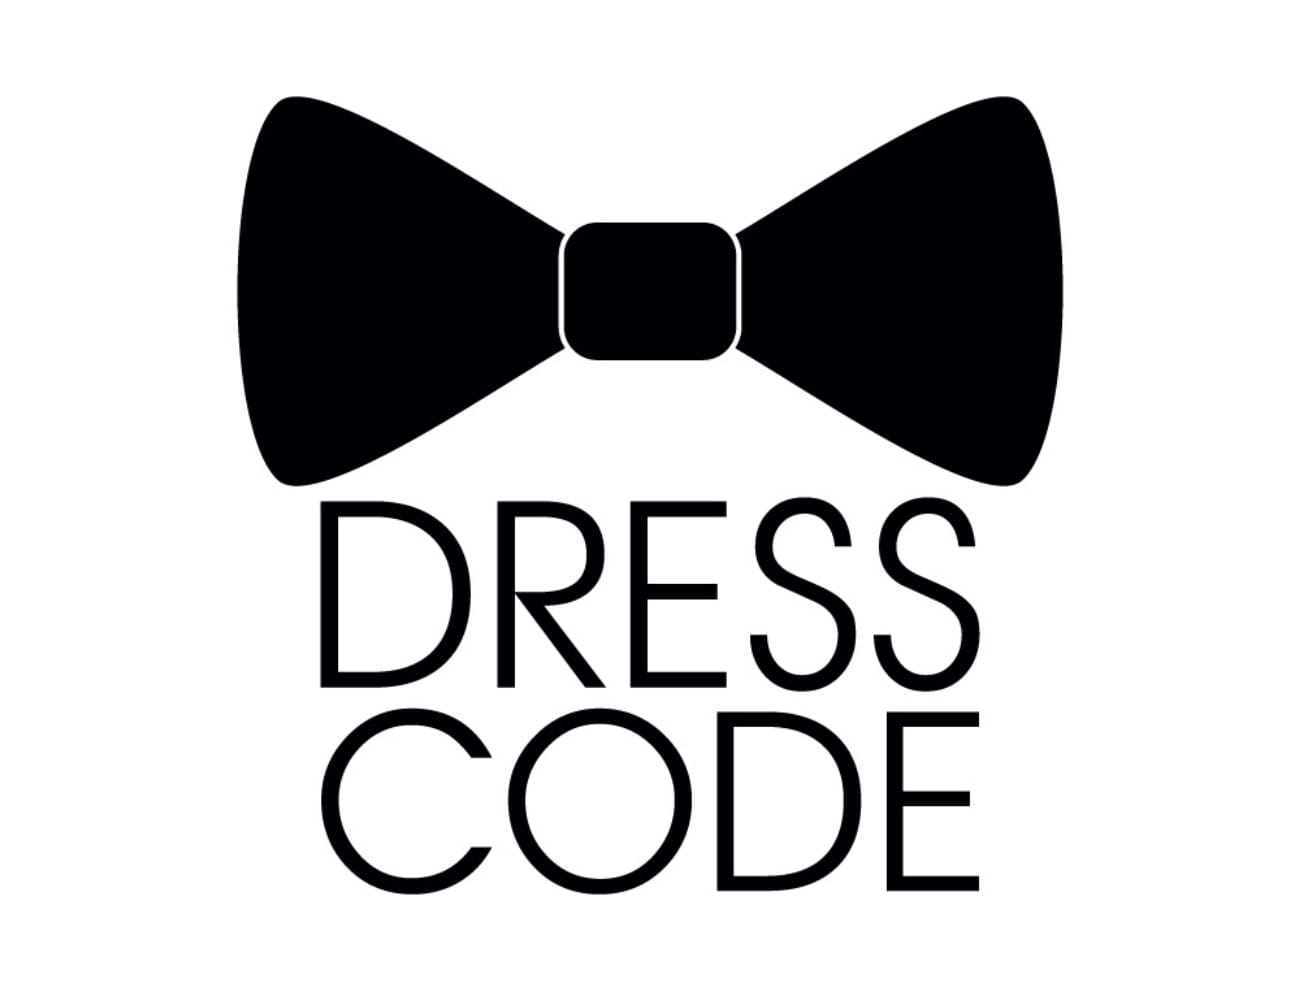 ‘Dress Code’ written under a black bowtie.